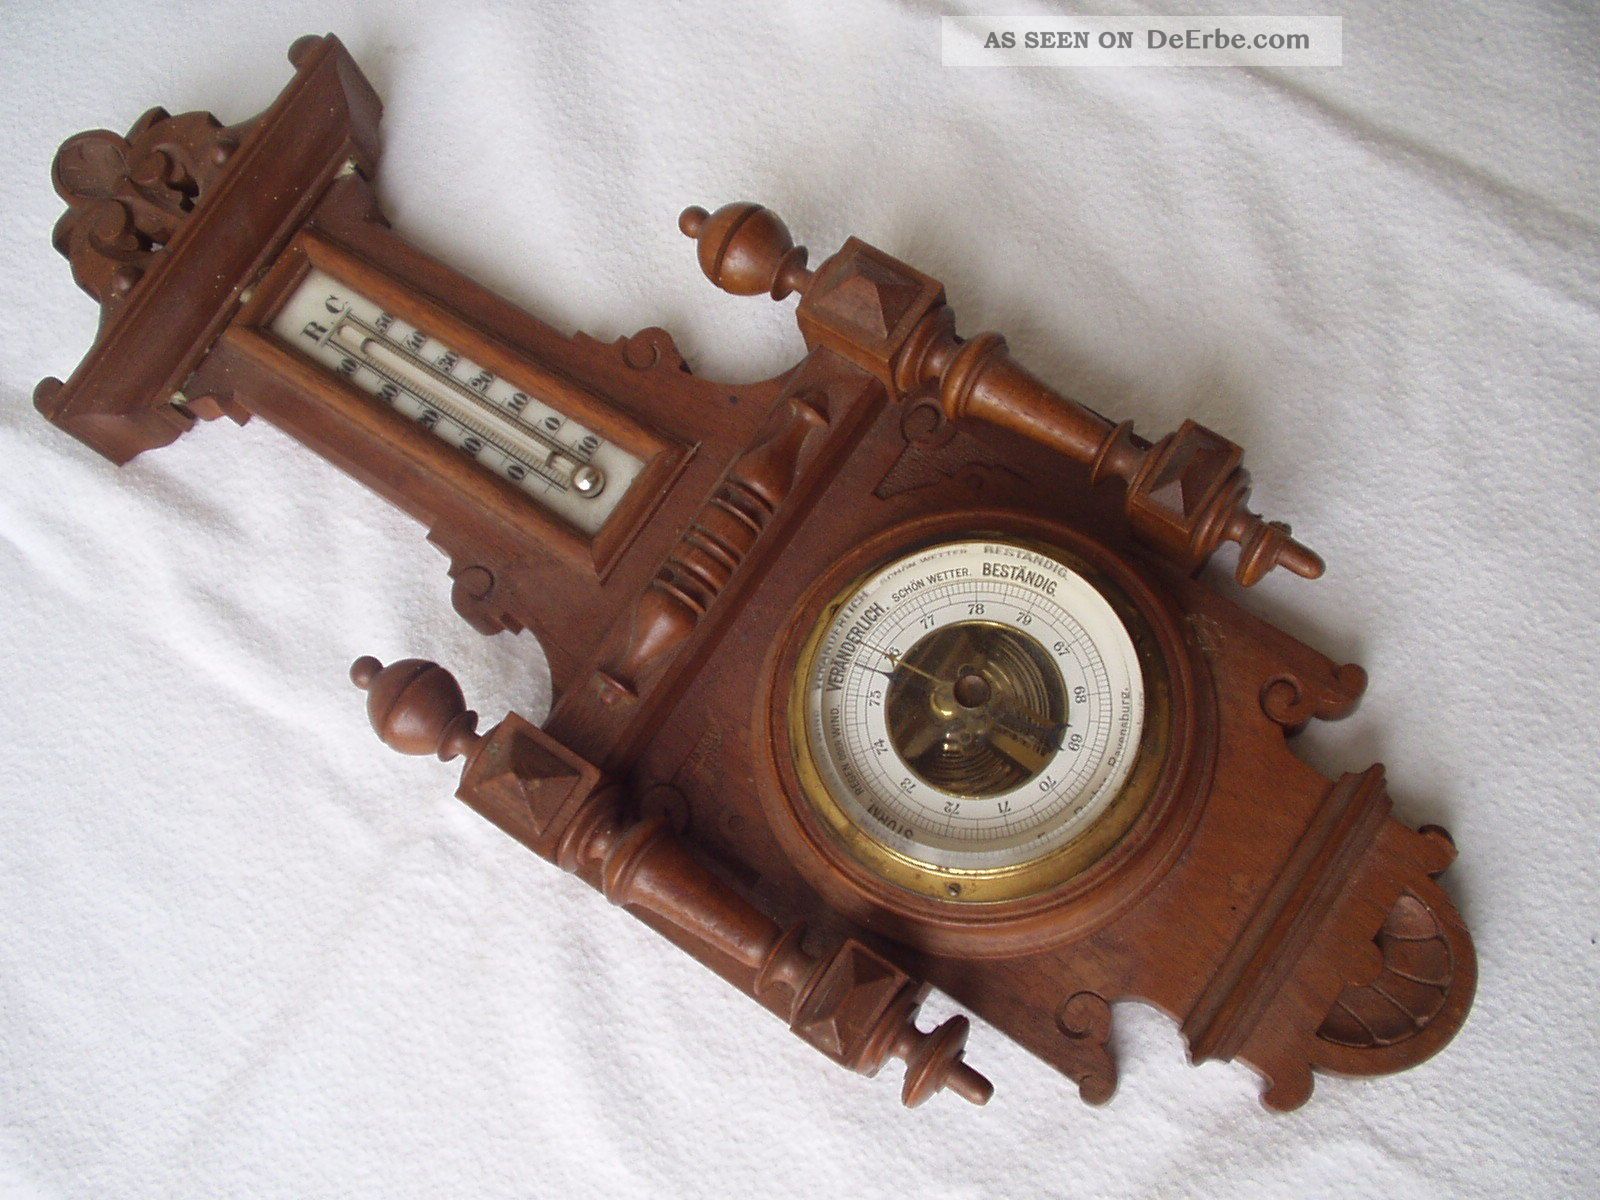 Antike Originale Wetterstation/barometer/thermometer Voll Funktionsfähig Um 1880 Wettergeräte Bild